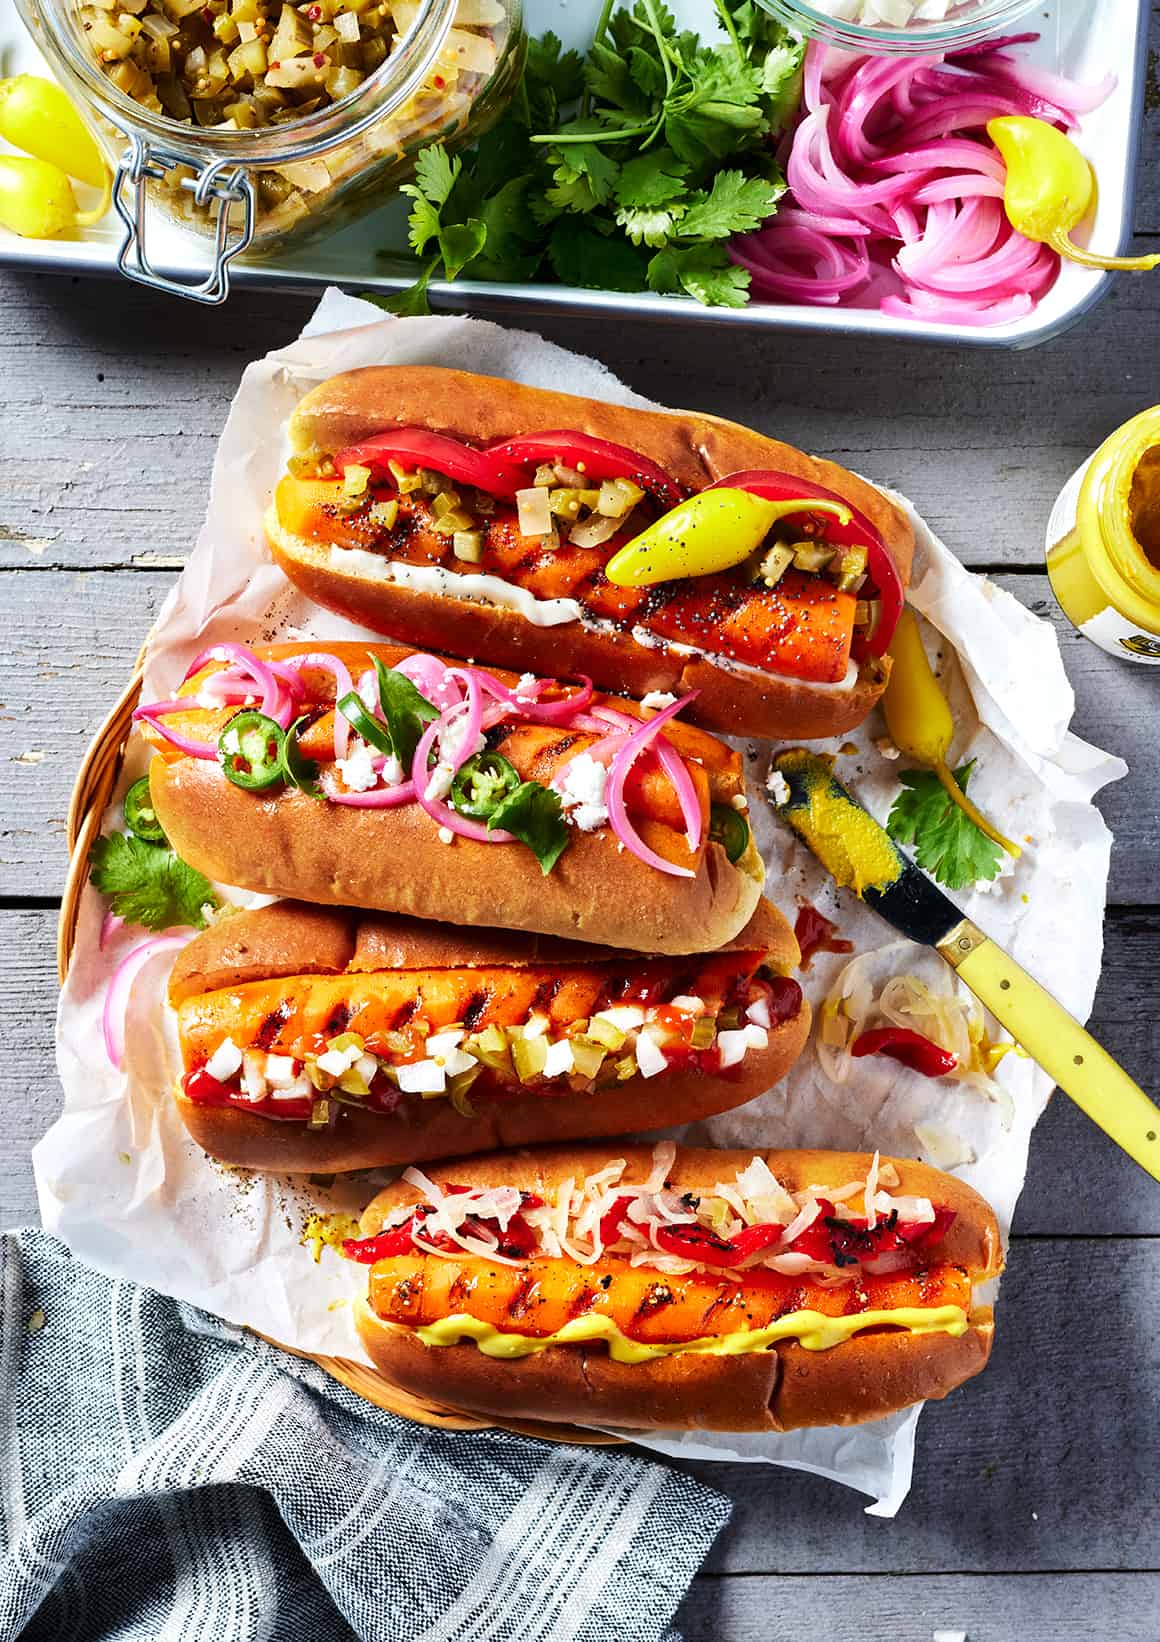 Vegan hot dogs